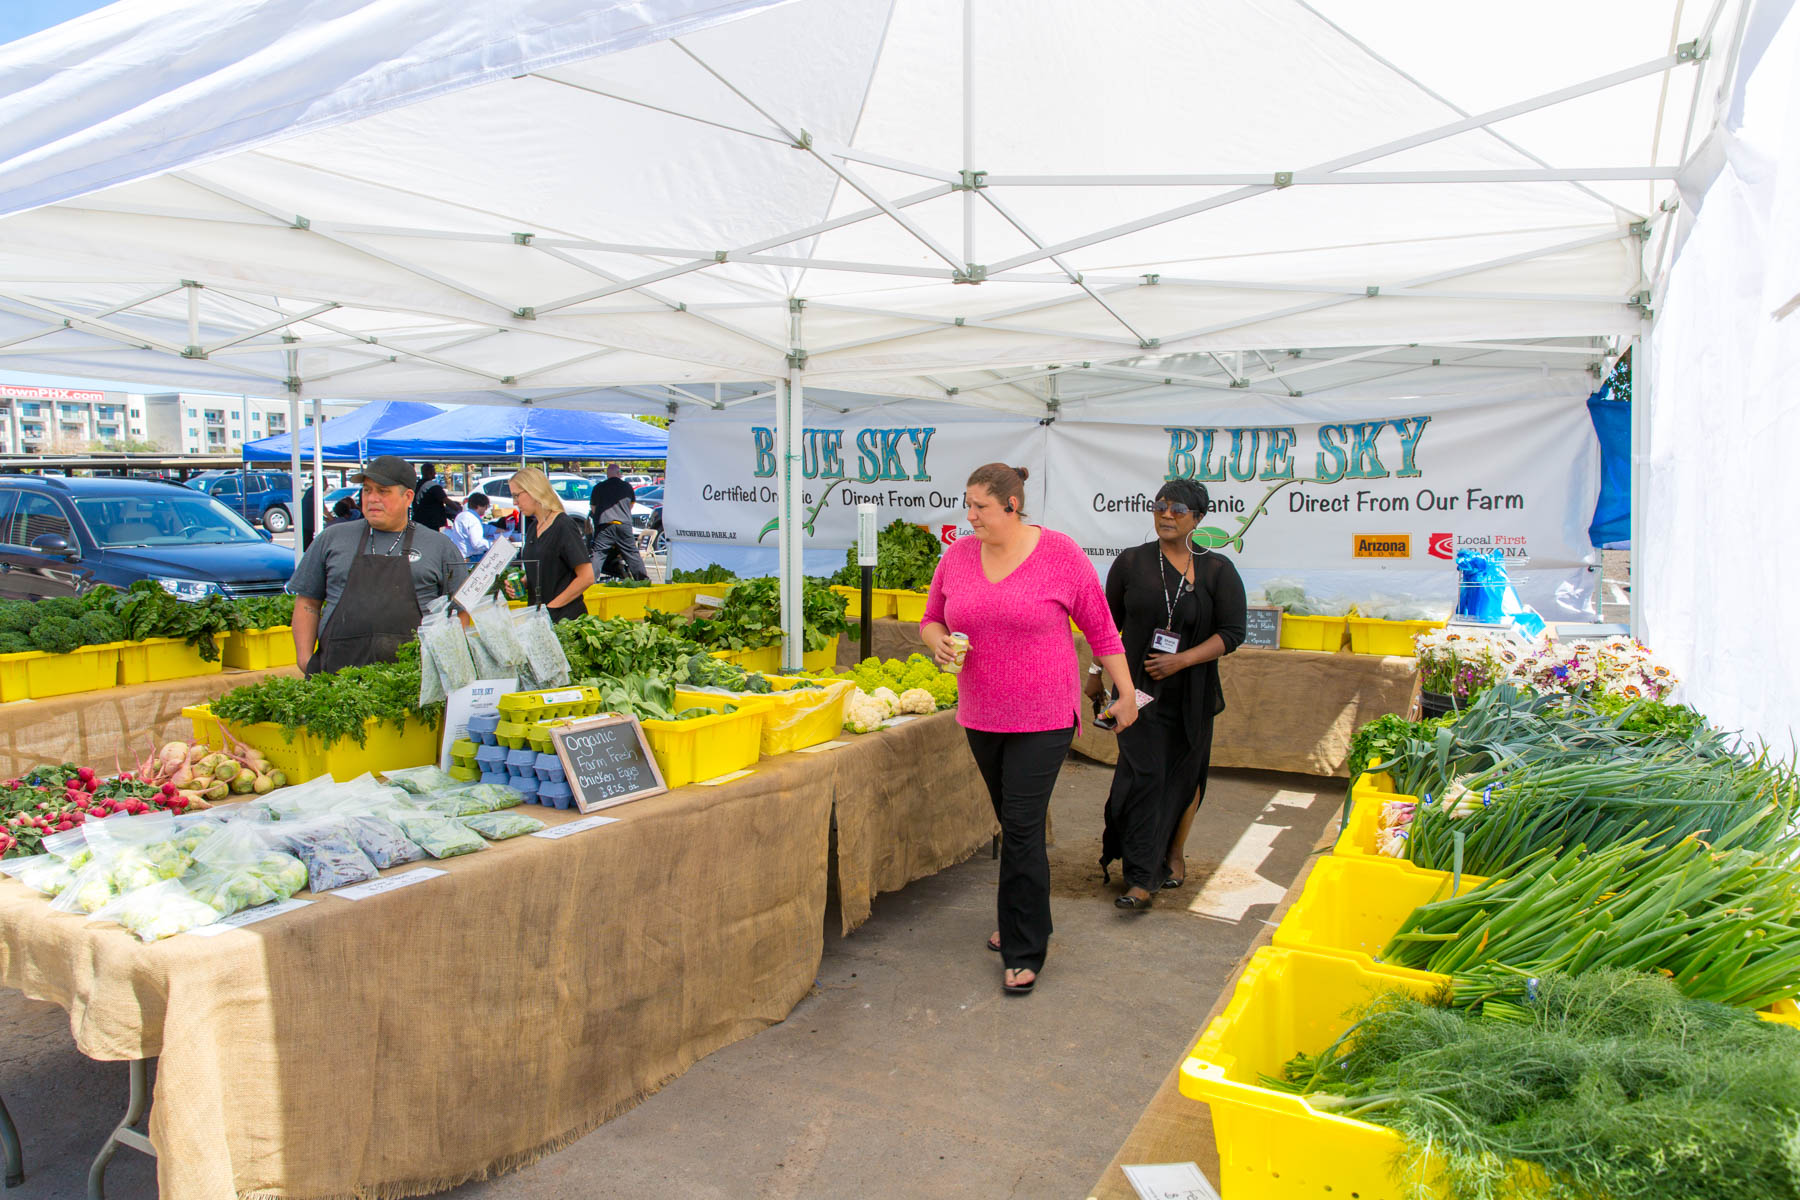 Midtown Farmers Market Benefits Good Causes in Phoenix